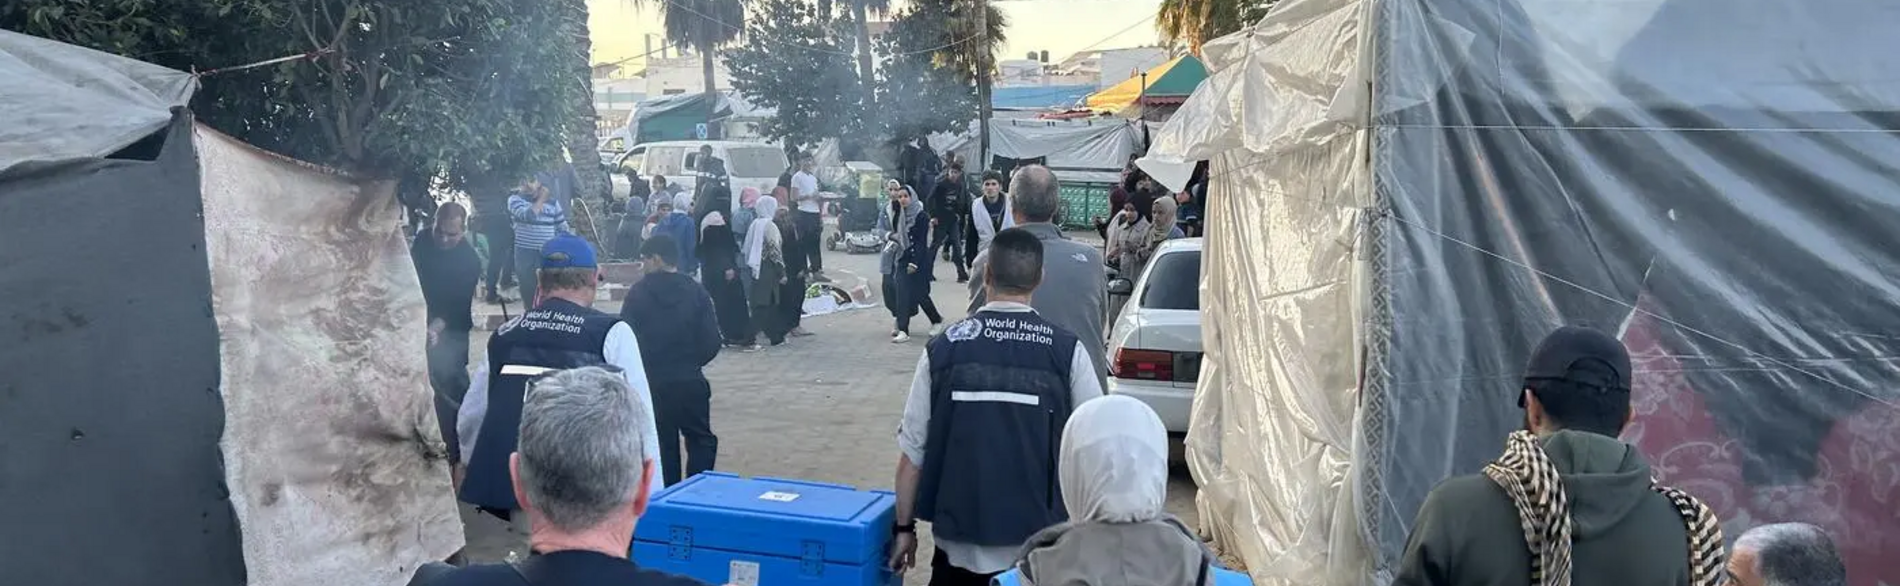 OCHA, World Health Organization and partners bring supplies to Shuhada al-Aqsa Hospital in the middle of the Gaza Strip on 10 February. Photo: OCHA